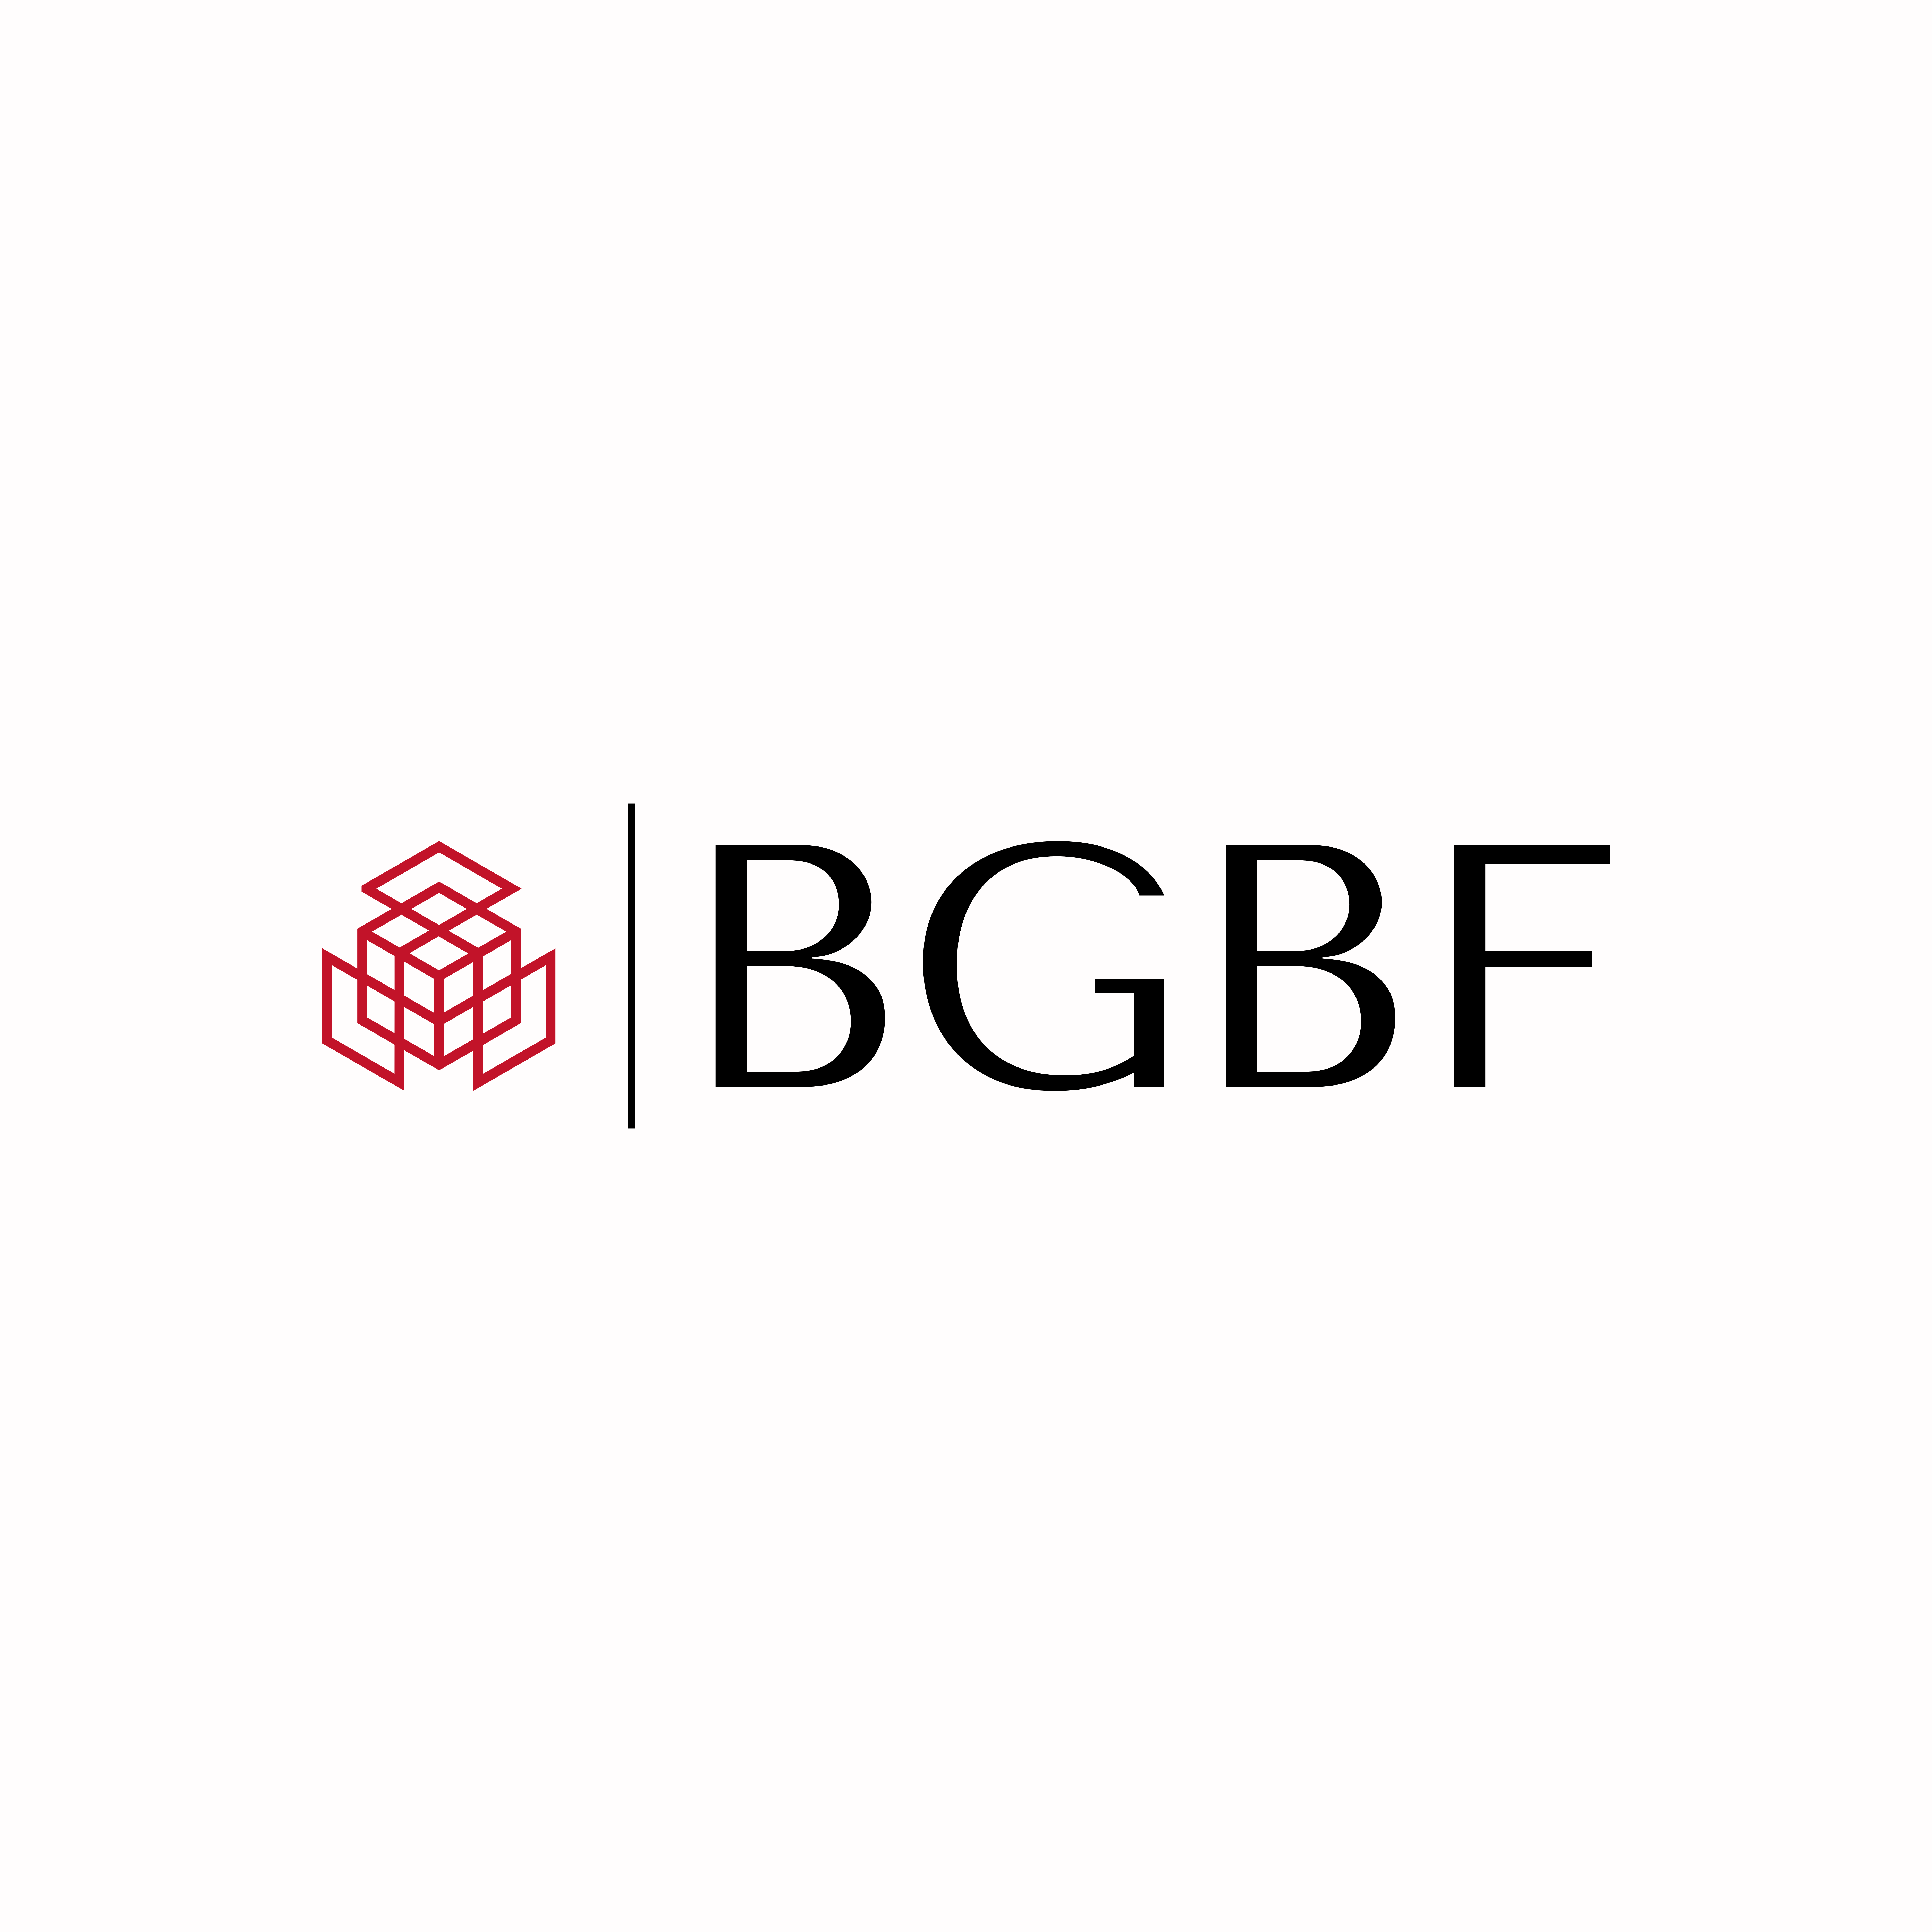 BGBF logo.png